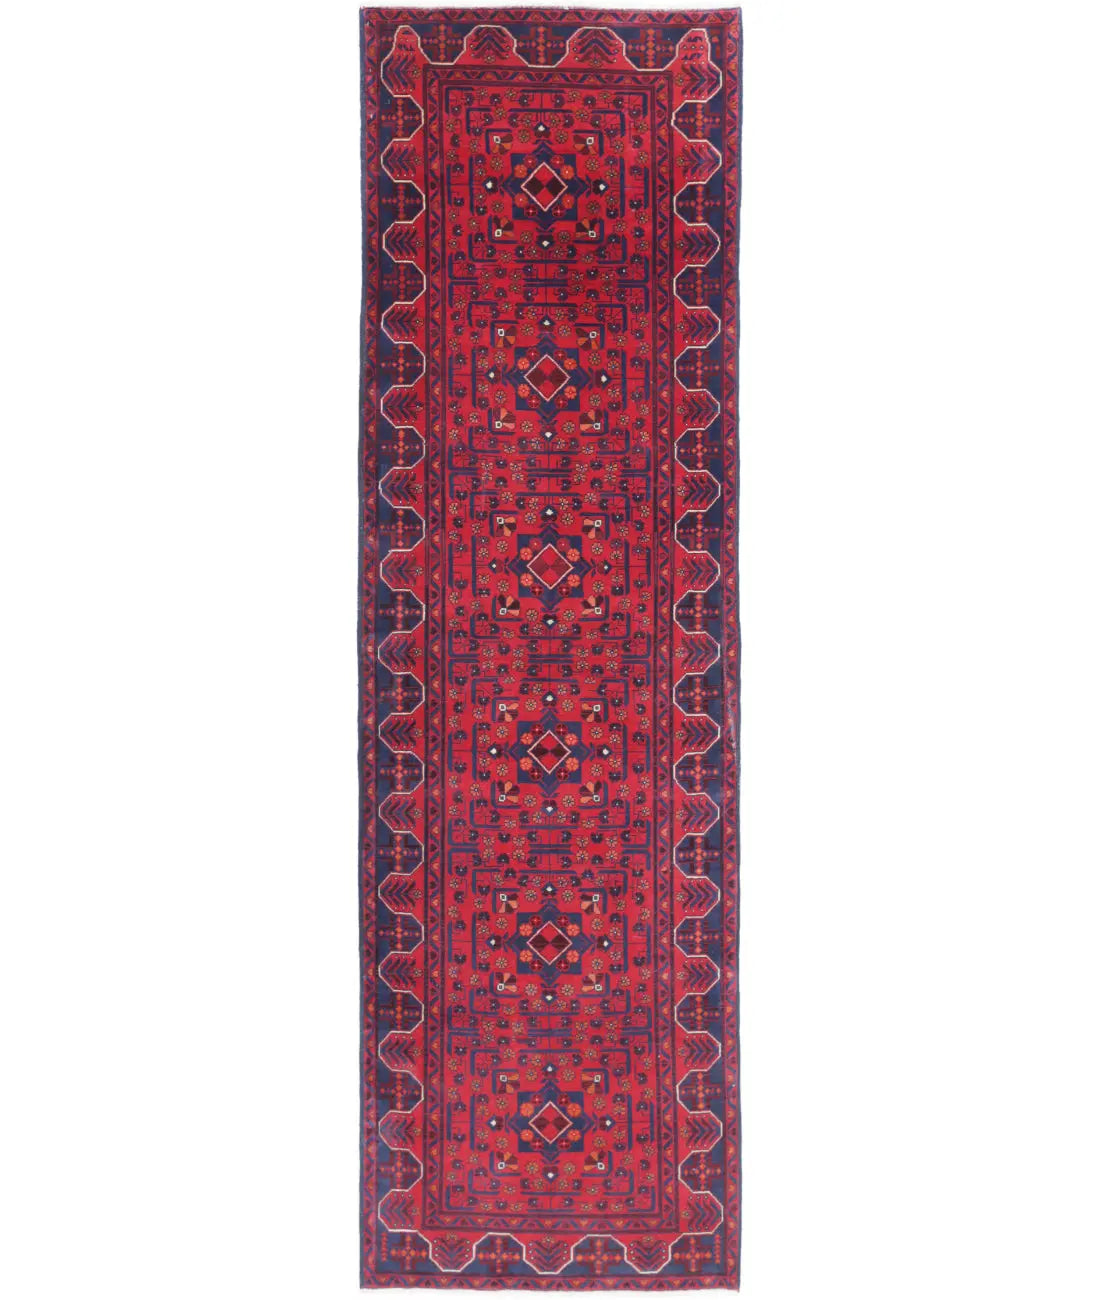 Hand Knotted Afghan Khamyab Wool Rug - 2'8'' x 9'6''